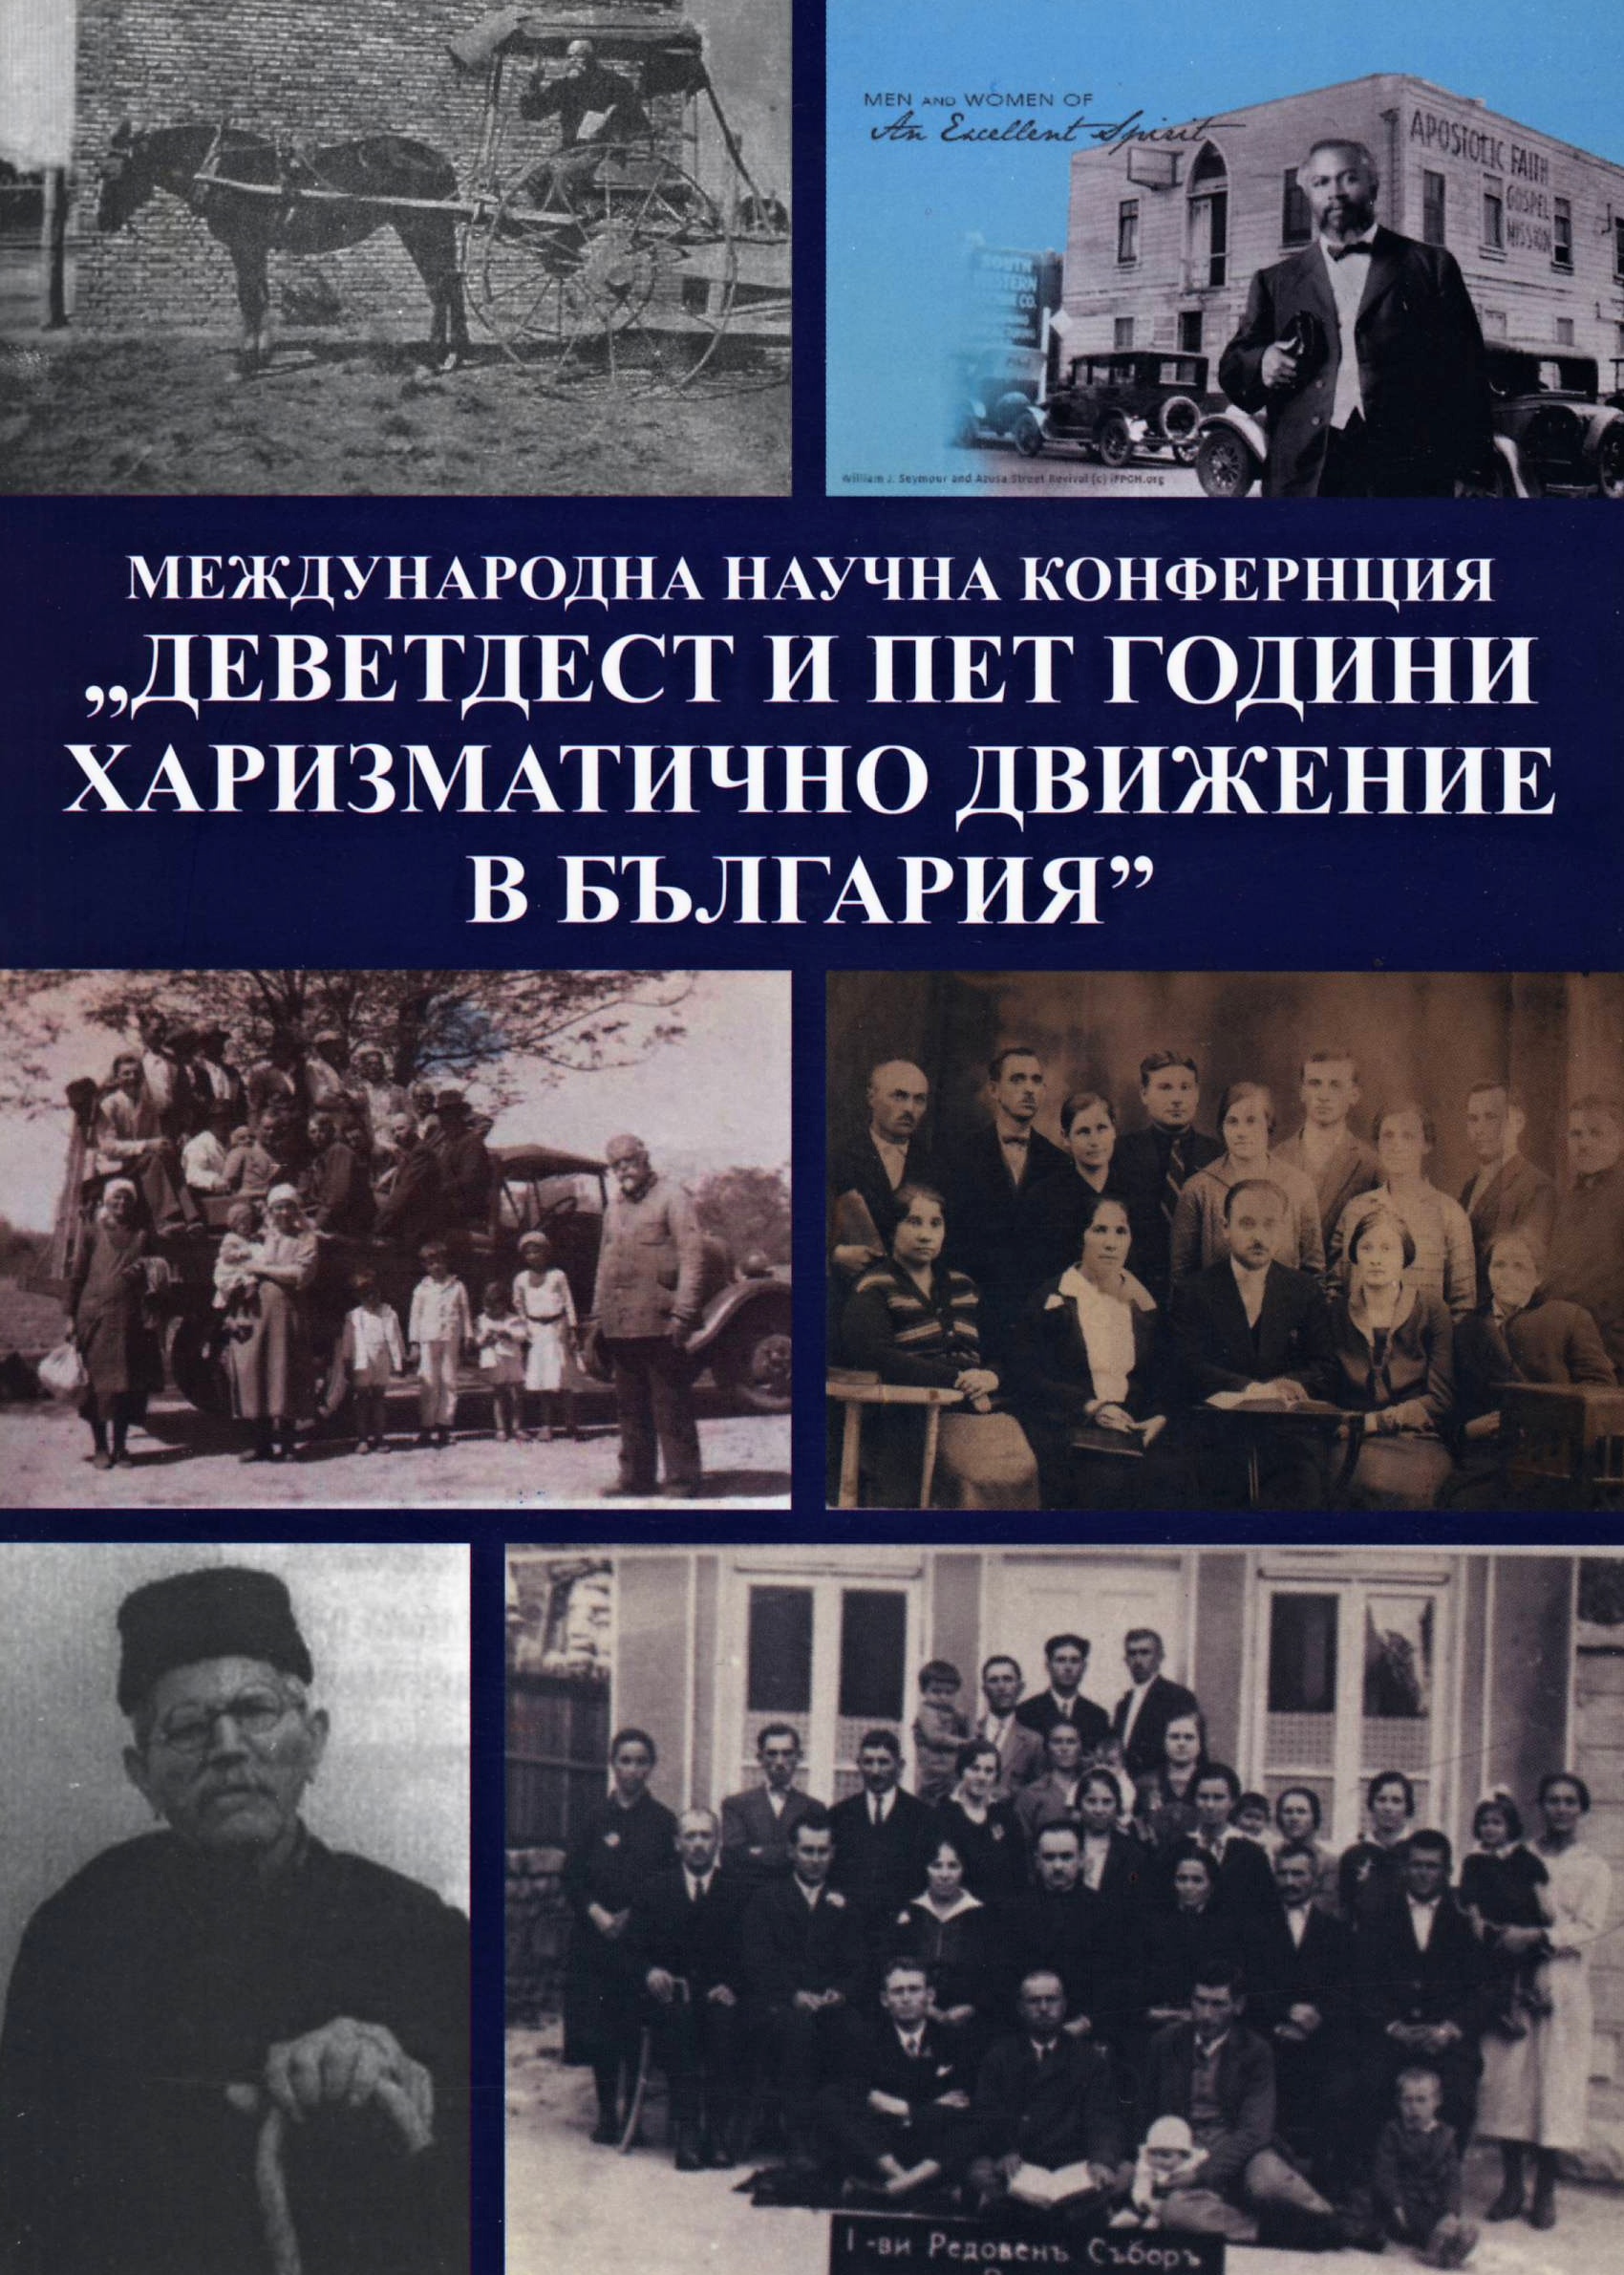 Международна научна конференция "Деветдесет и пет години Харизматично движение в България"